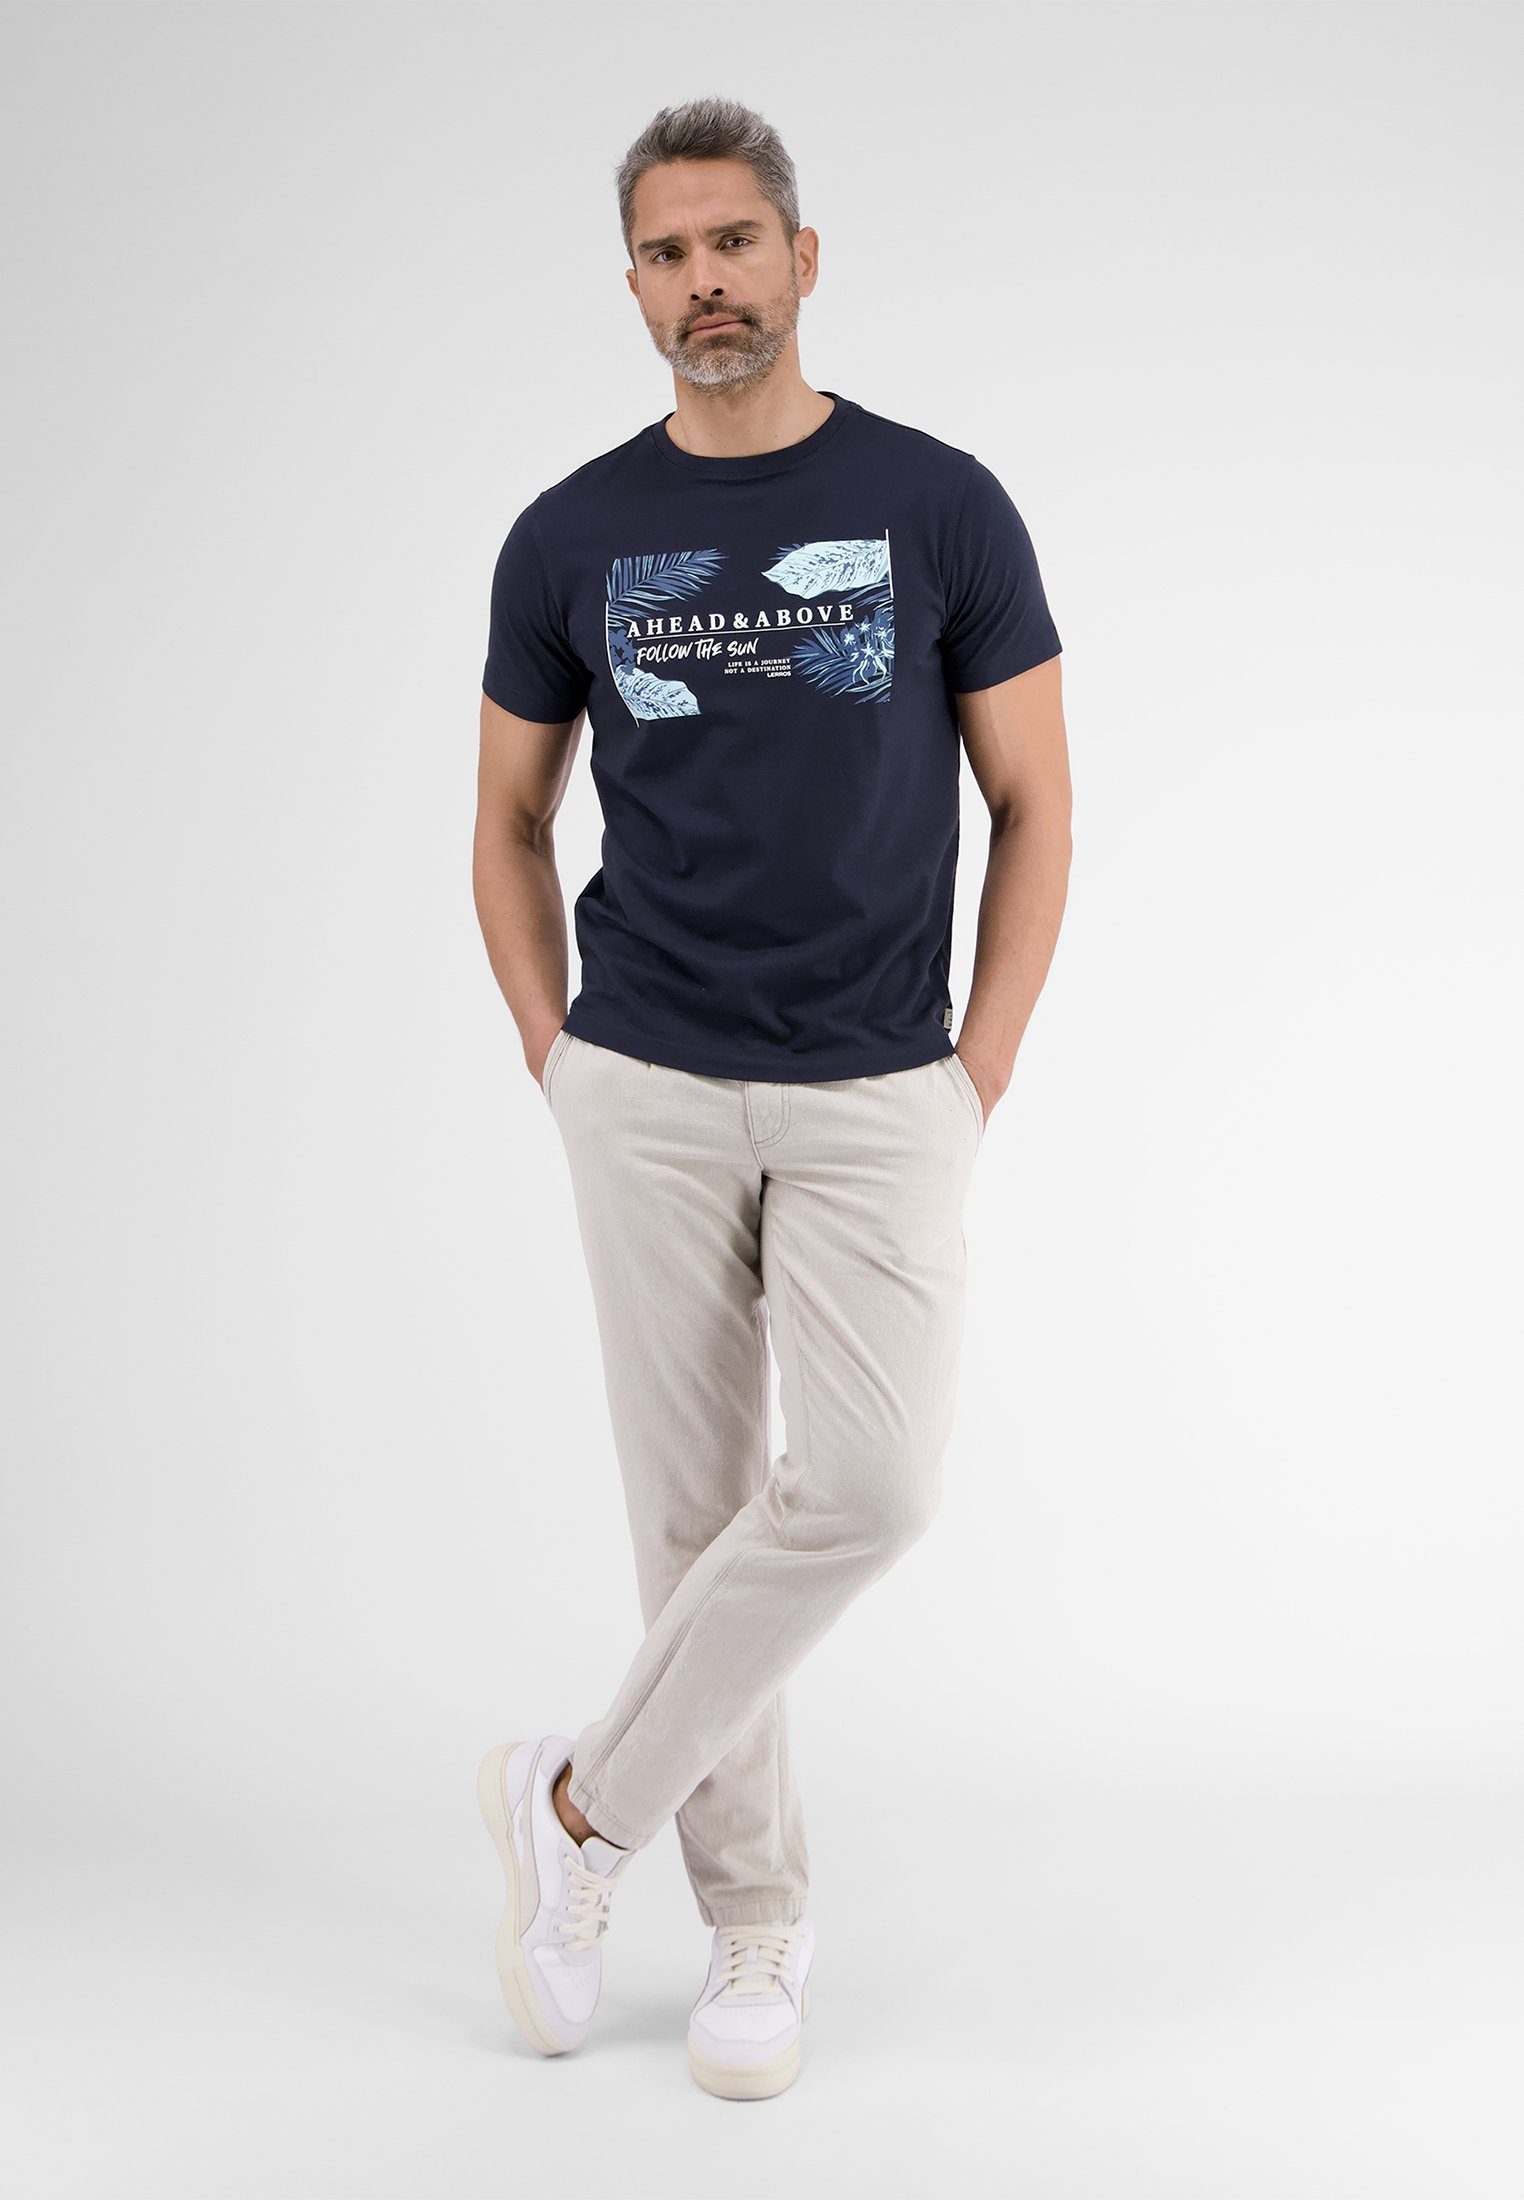 NAVY LERROS Design LERROS CLASSIC T-Shirt T-Shirt mit